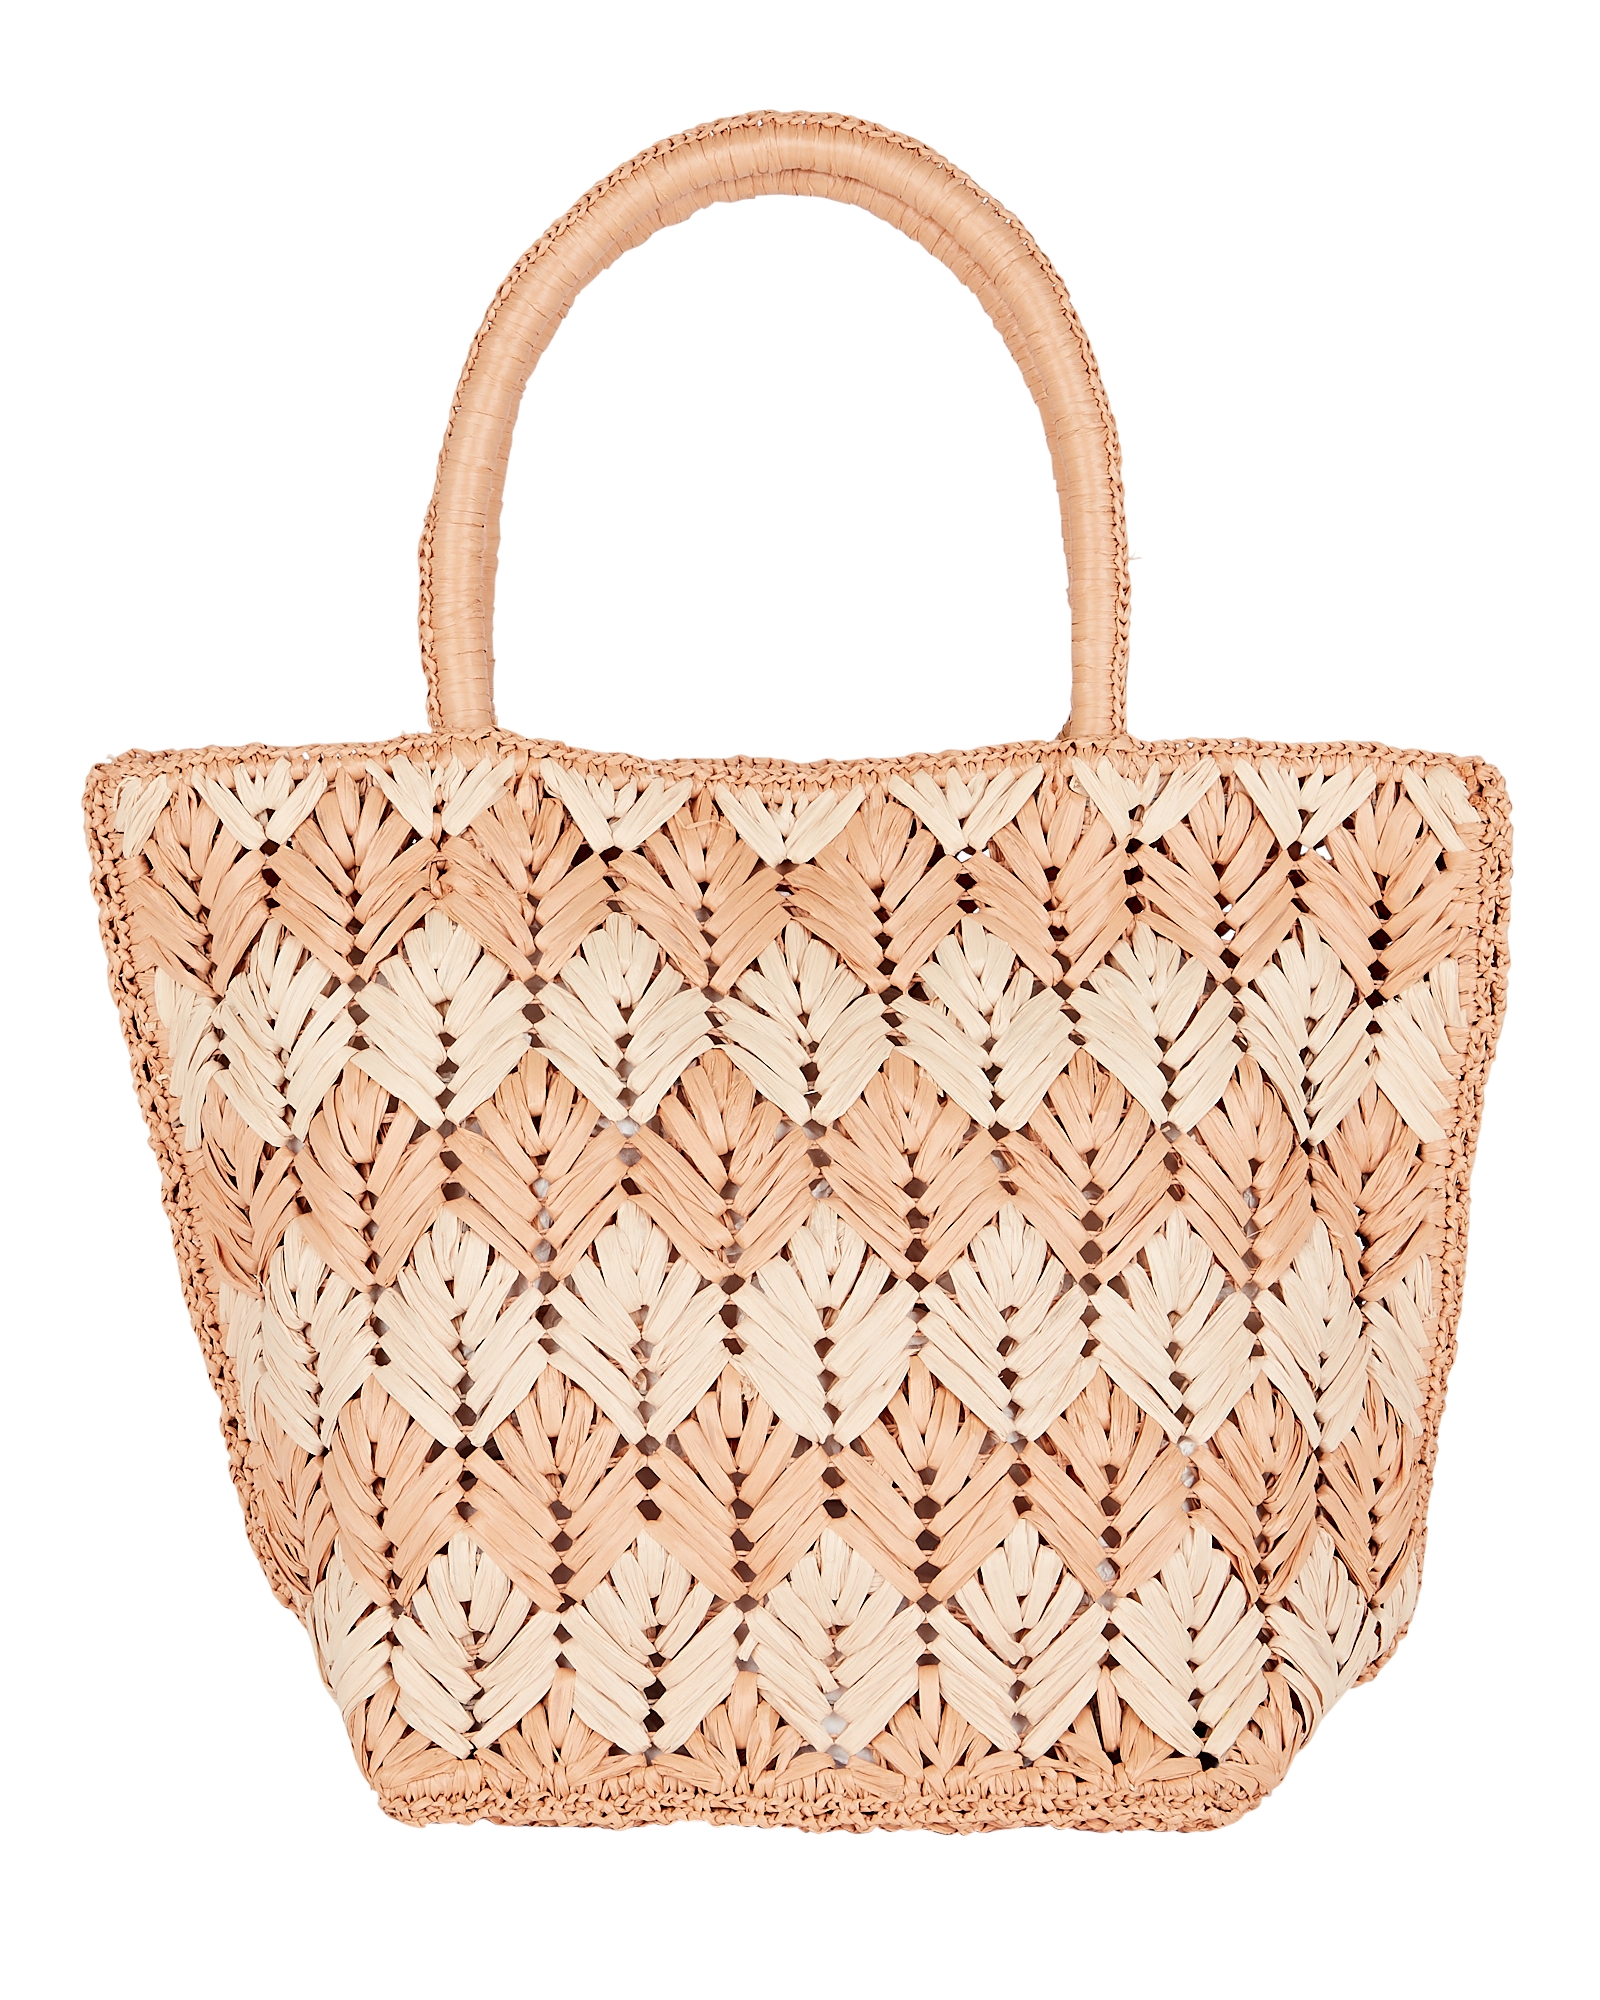 Carrie Forbes Ali Crochet Raffia Tote Bag | INTERMIX®